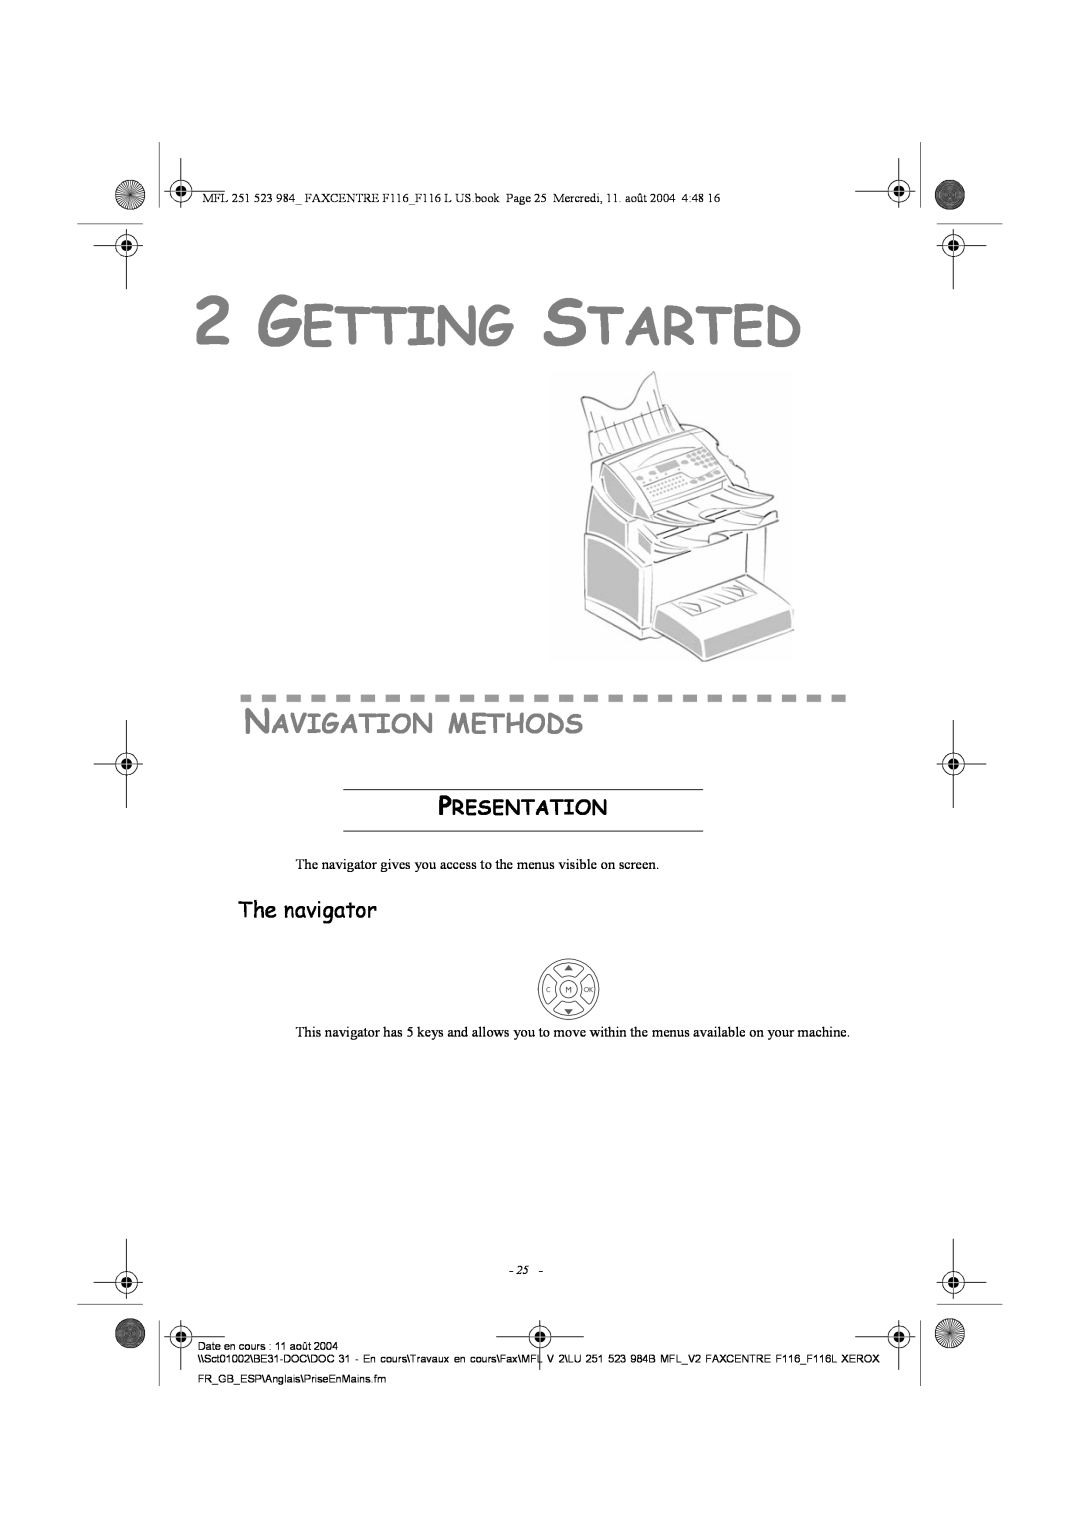 Xerox F116 user manual 2GETTING STARTED, Navigation Methods, The navigator, Presentation 